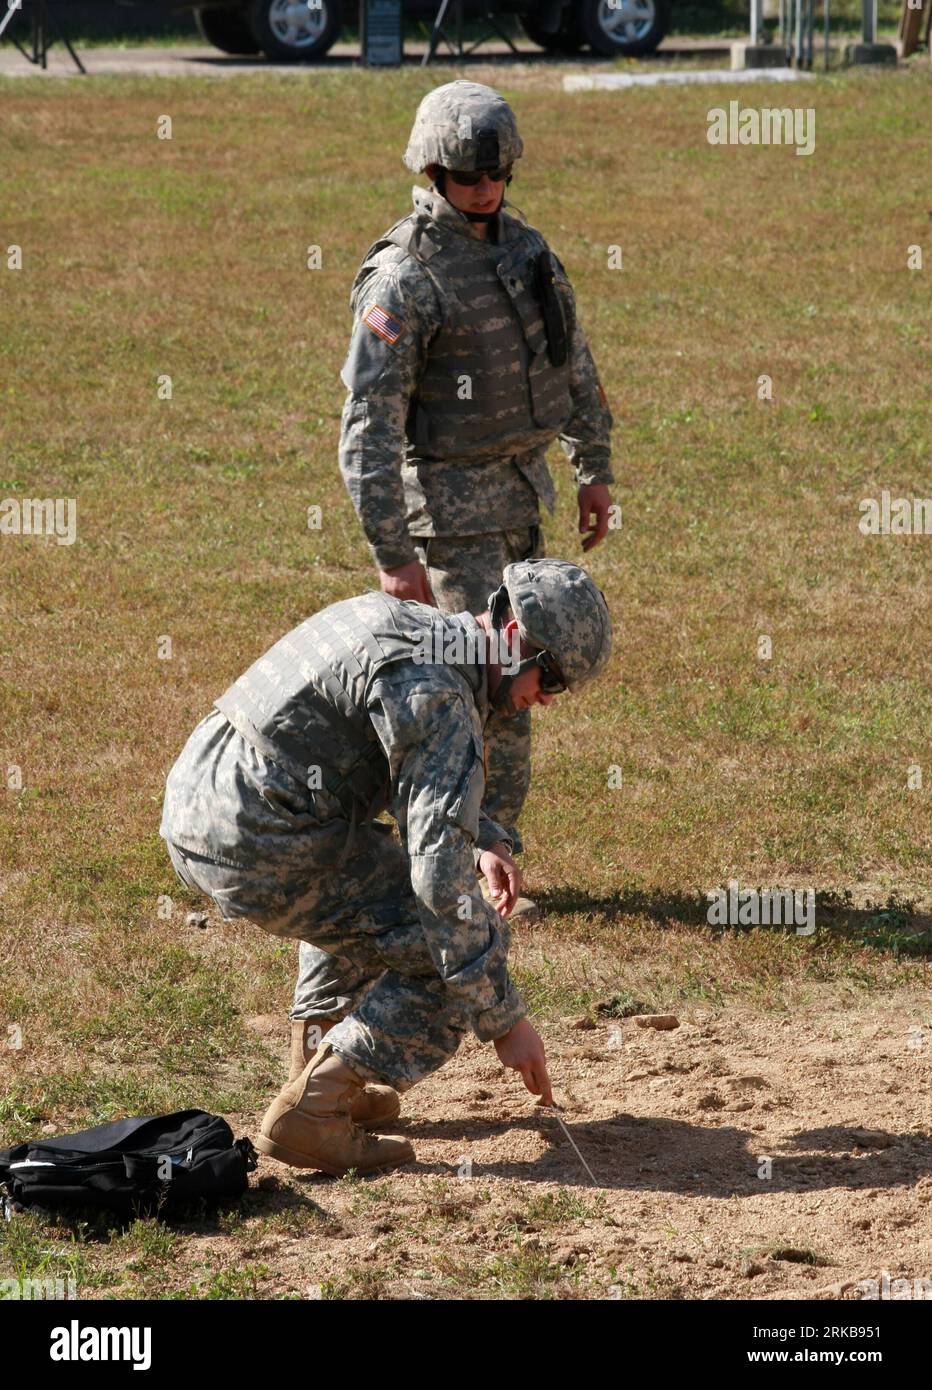 Bildnummer: 54517776  Datum: 07.10.2010  Copyright: imago/Xinhua (101007) -- SEOUL, Oct. 7, 2010 (Xinhua) -- U.S. soldiers of the 718th Ordnance Company Explosive Ordnance Disposal (EOD) look for explosives during an explosive removal training exercise at Rodriguez traing field in Pocheon, Gyeonggi Province of South Korea, on Oct. 7, 2010. (Xinhua/Park Jin-hee) (wh) SOUTH KOREA-MILITARY-TRAINING PUBLICATIONxNOTxINxCHN Gesellschaft Militärübung Militär Übung kbdig xub 2010 hoch  o0 Sprengstoff, Sprengstoffübung, Bombenübung, Entschärfen, Soldat    Bildnummer 54517776 Date 07 10 2010 Copyright I Stock Photo